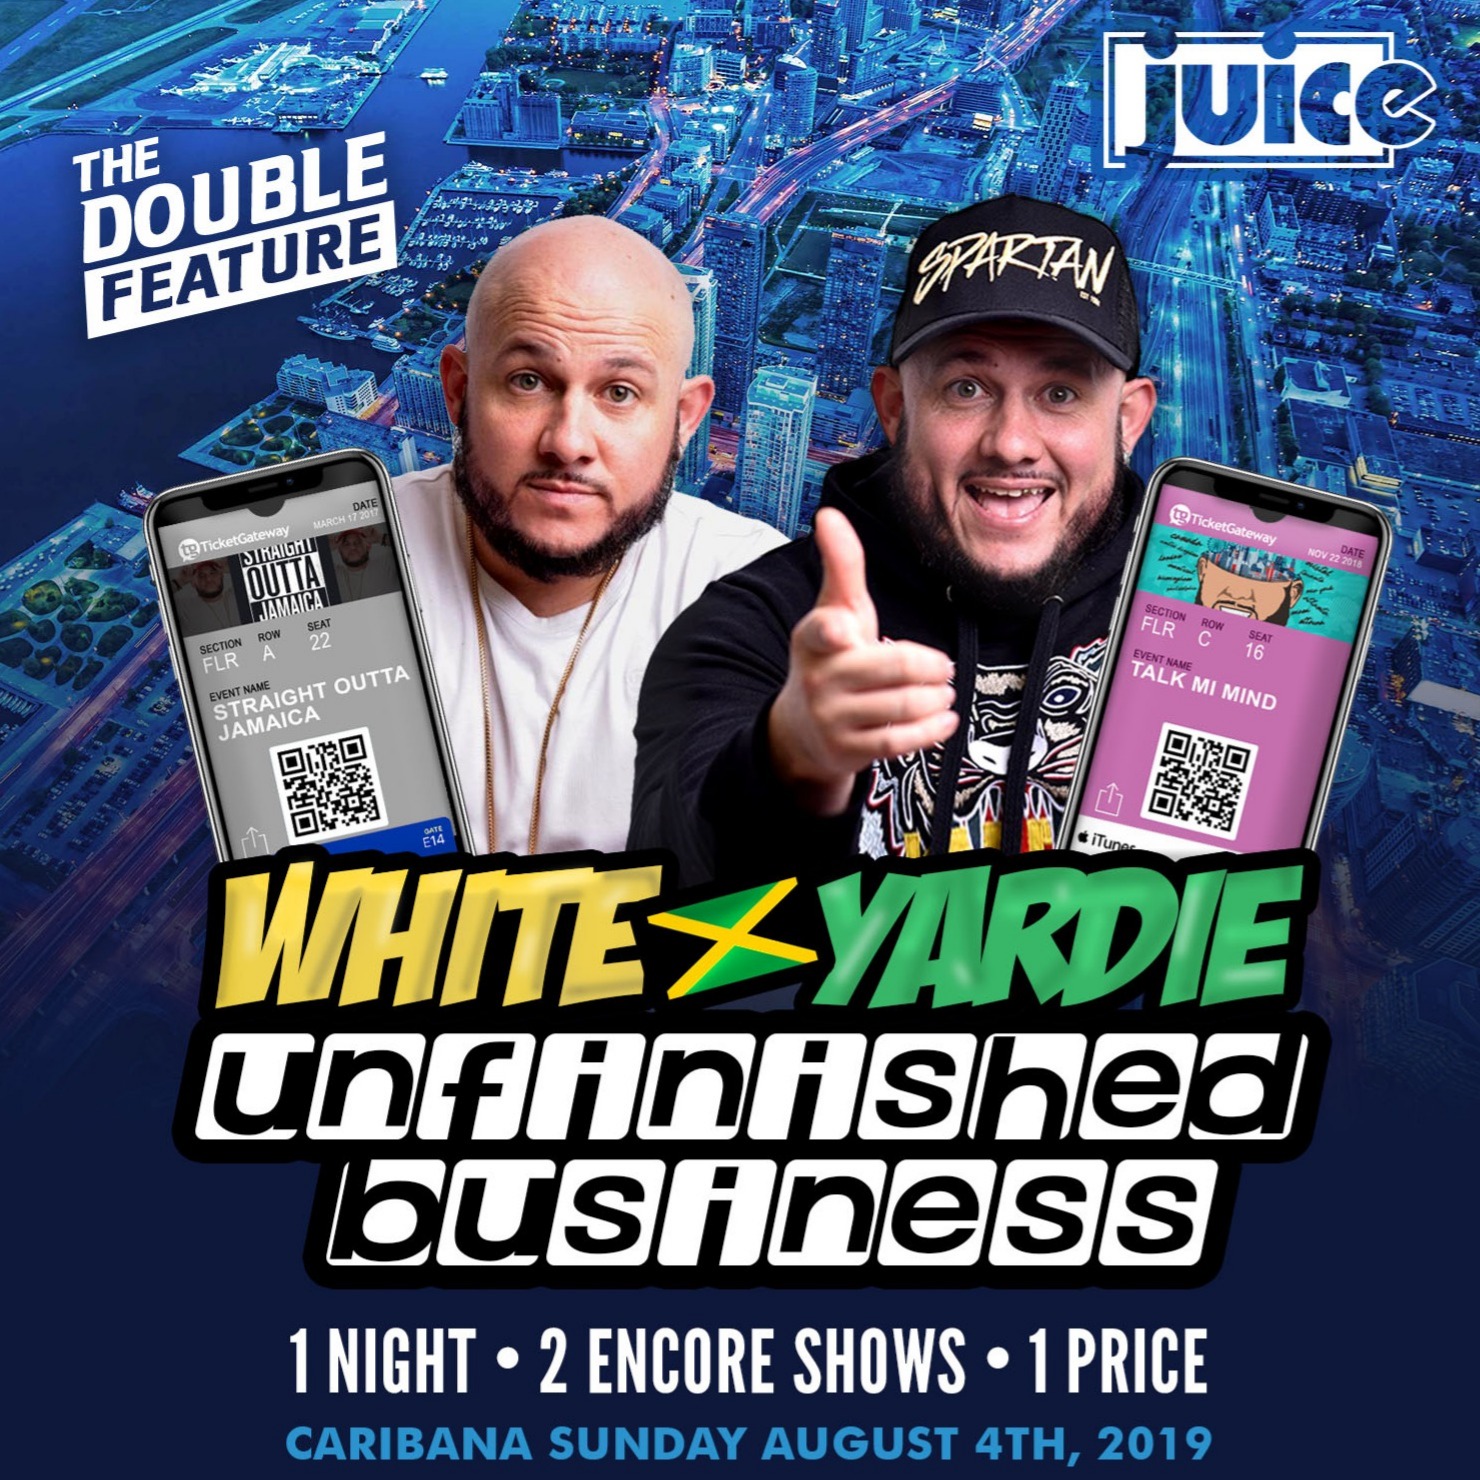 JUICE Comedy pres 'UNFINISHED BUSINESS' feat White Yardie (Caribana Sunday)